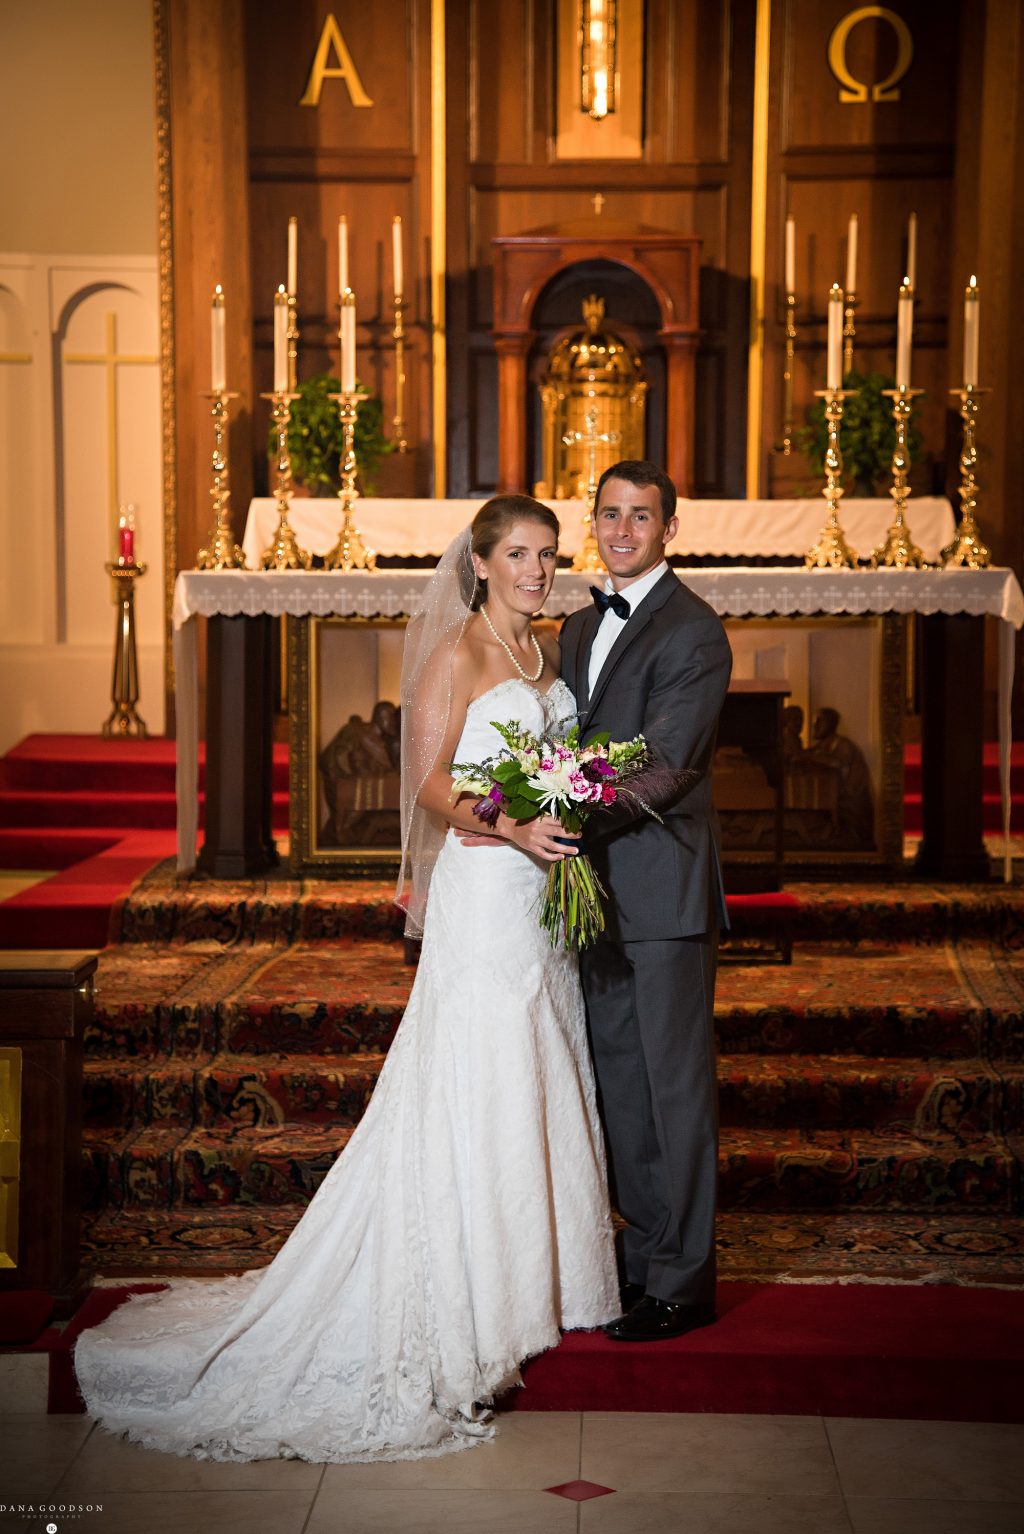 jacksonville-wedding-at-annunciation-catholic-church-dana-goodson-photography-033